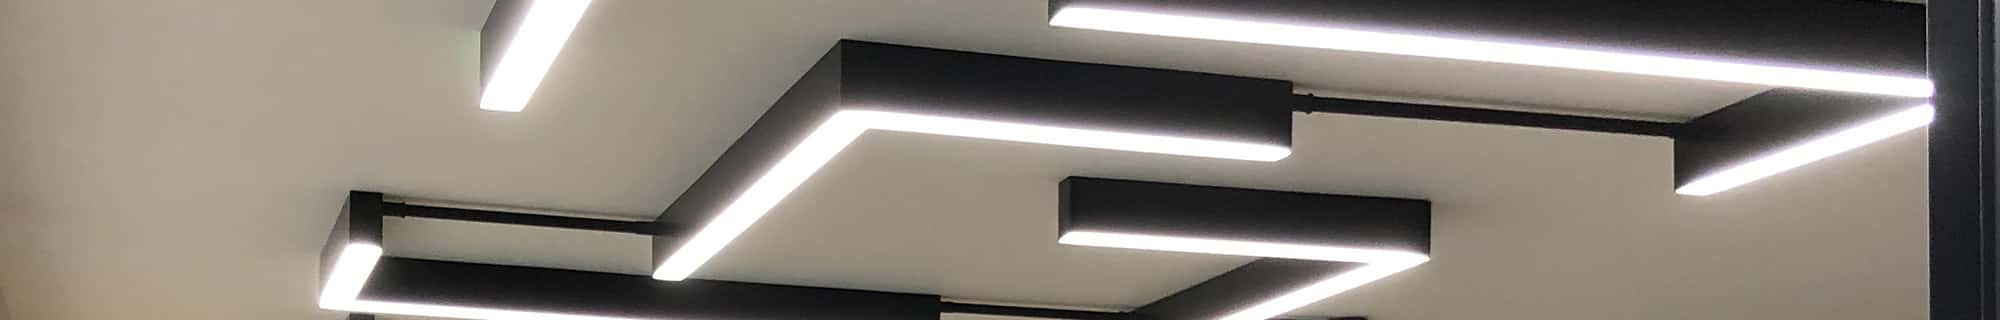 architectural LED lighting